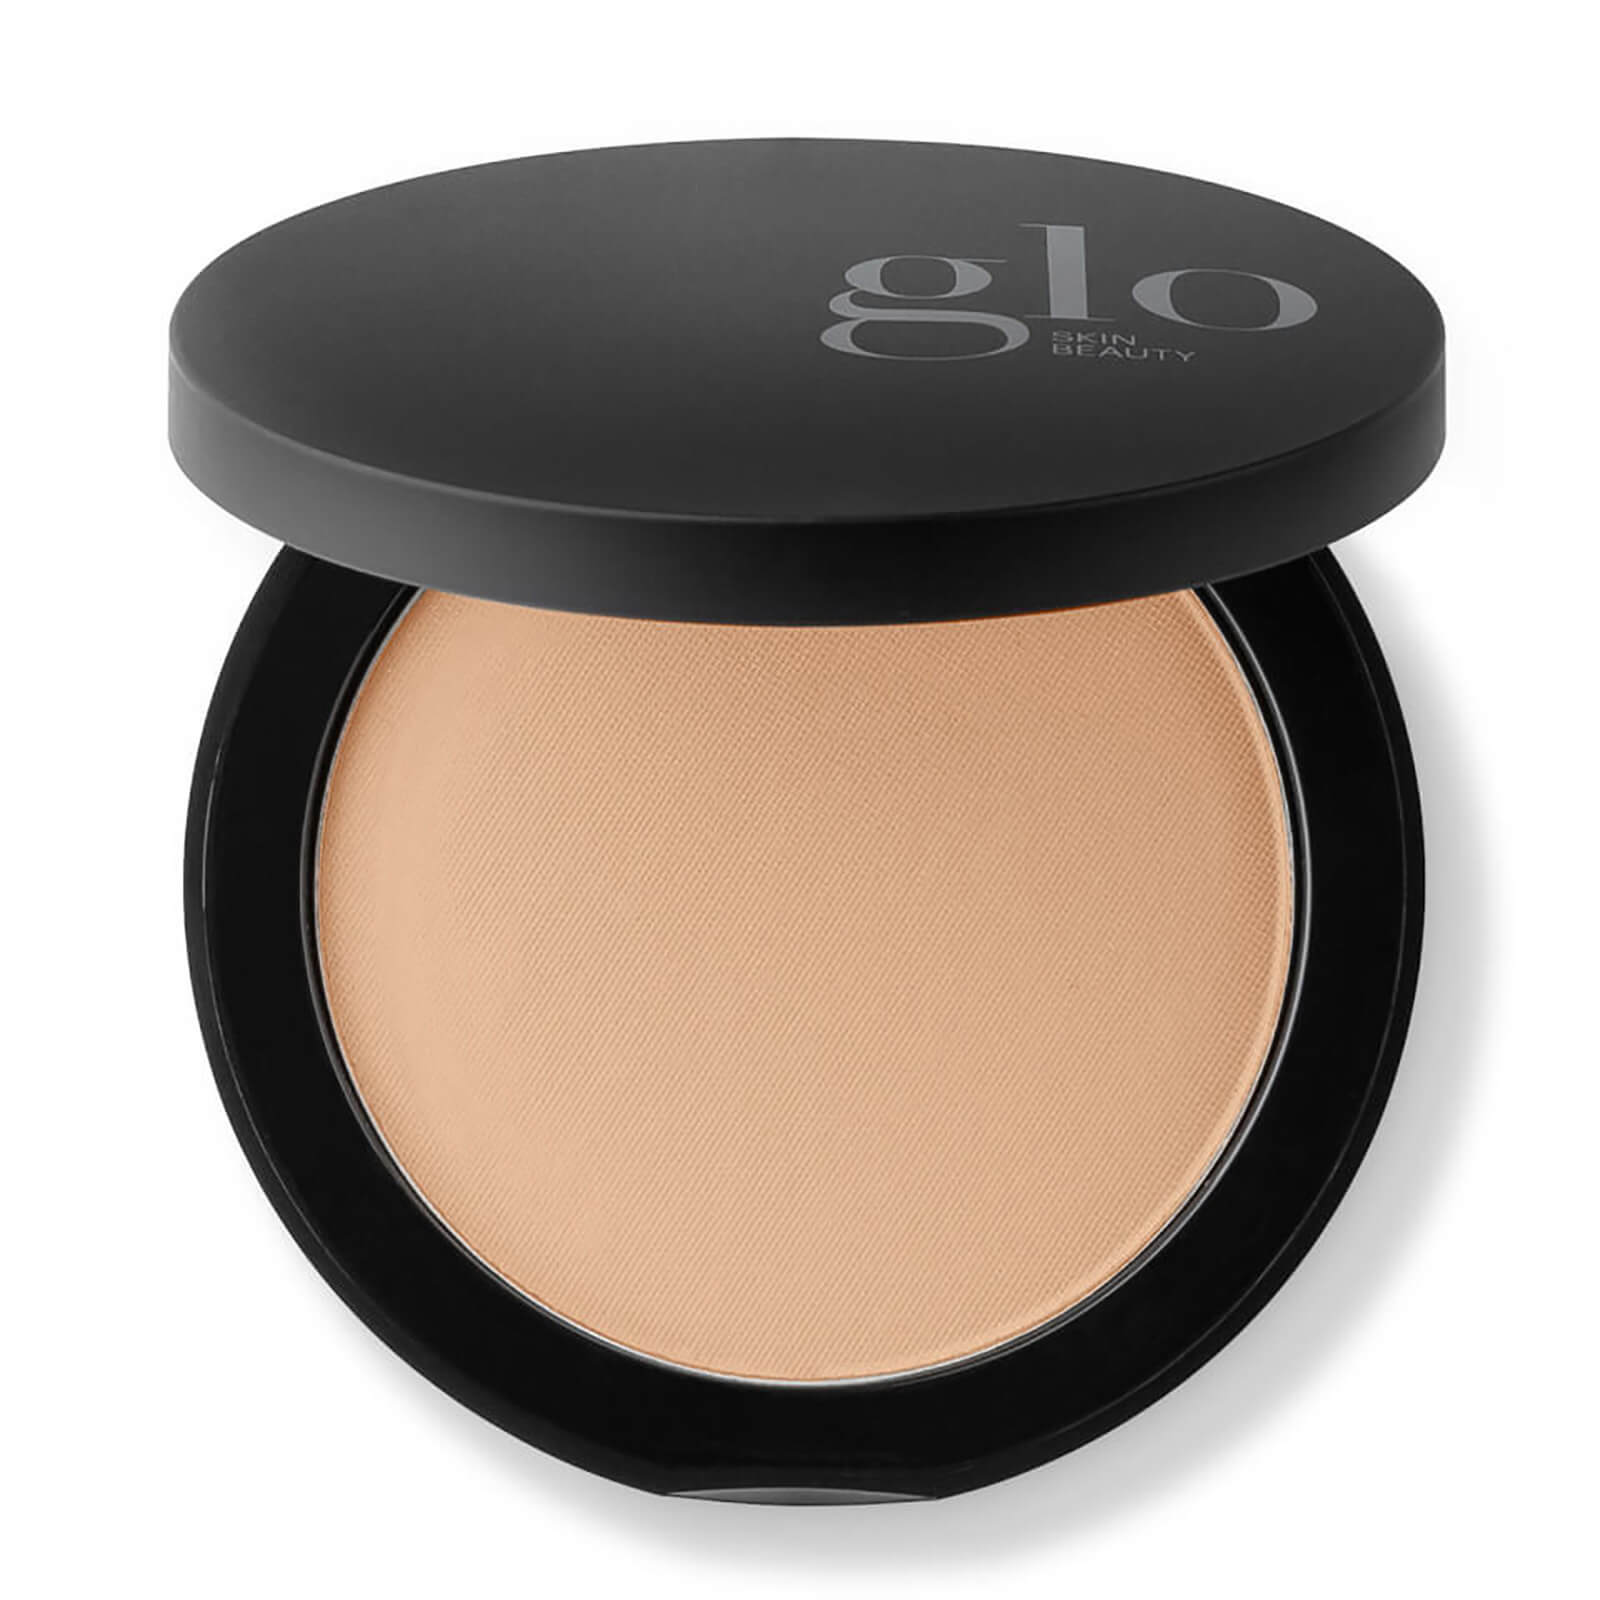 Glo Skin Beauty Pressed Base Powder Foundation (0.35 Oz.) In Honey Light